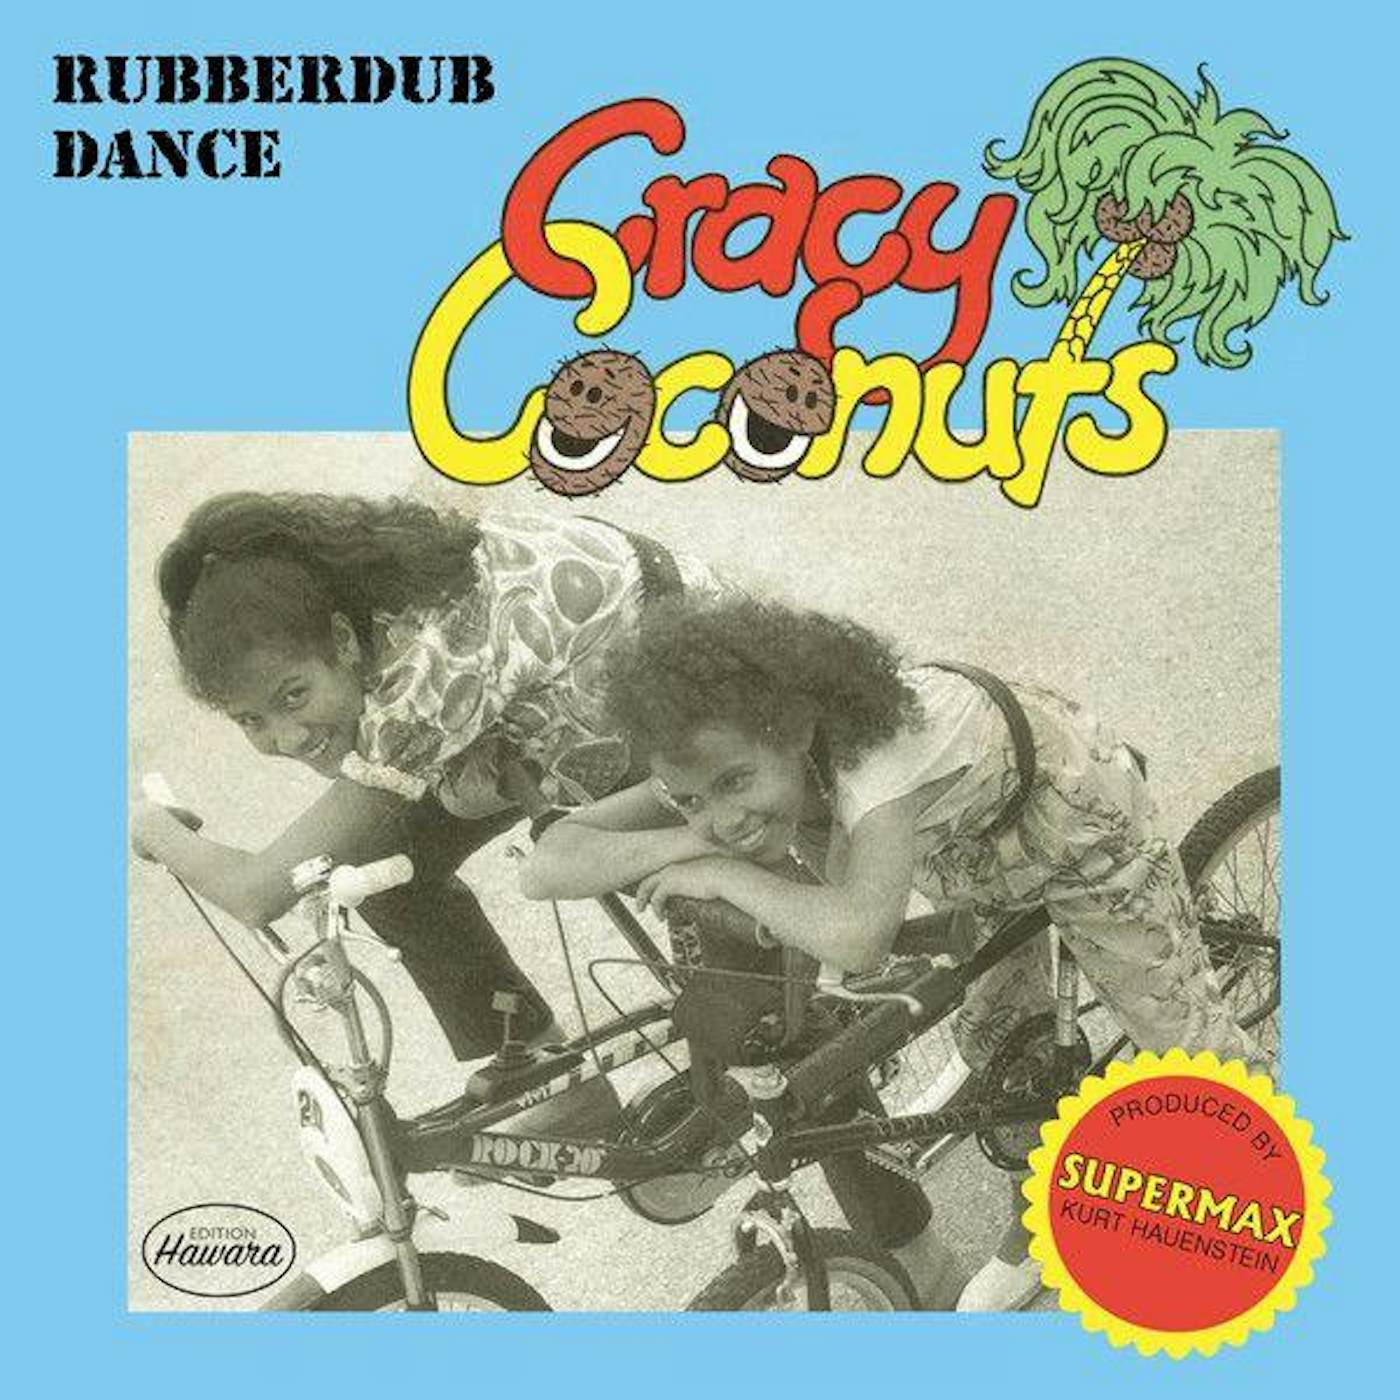 Cracy Coconuts Rubberdub Dance Vinyl Record